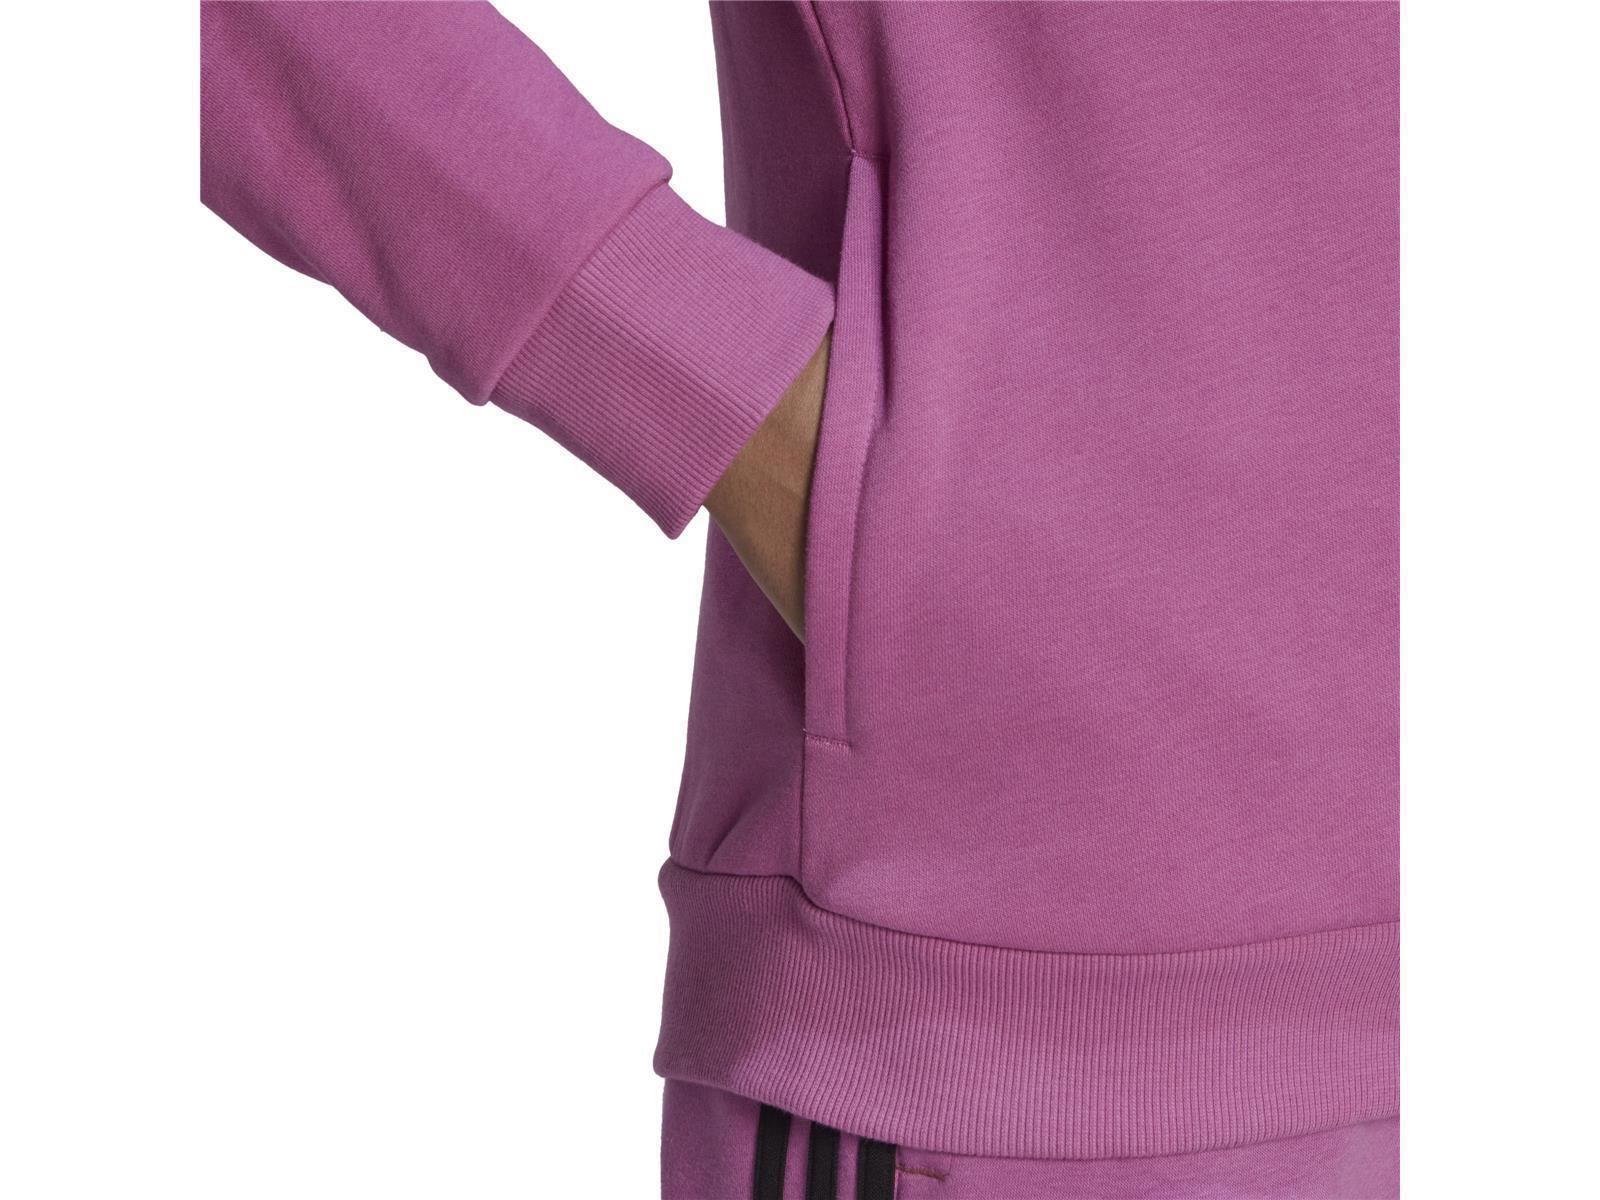 adidas Essentials Logo Fleece Hoody Damen rosa XS